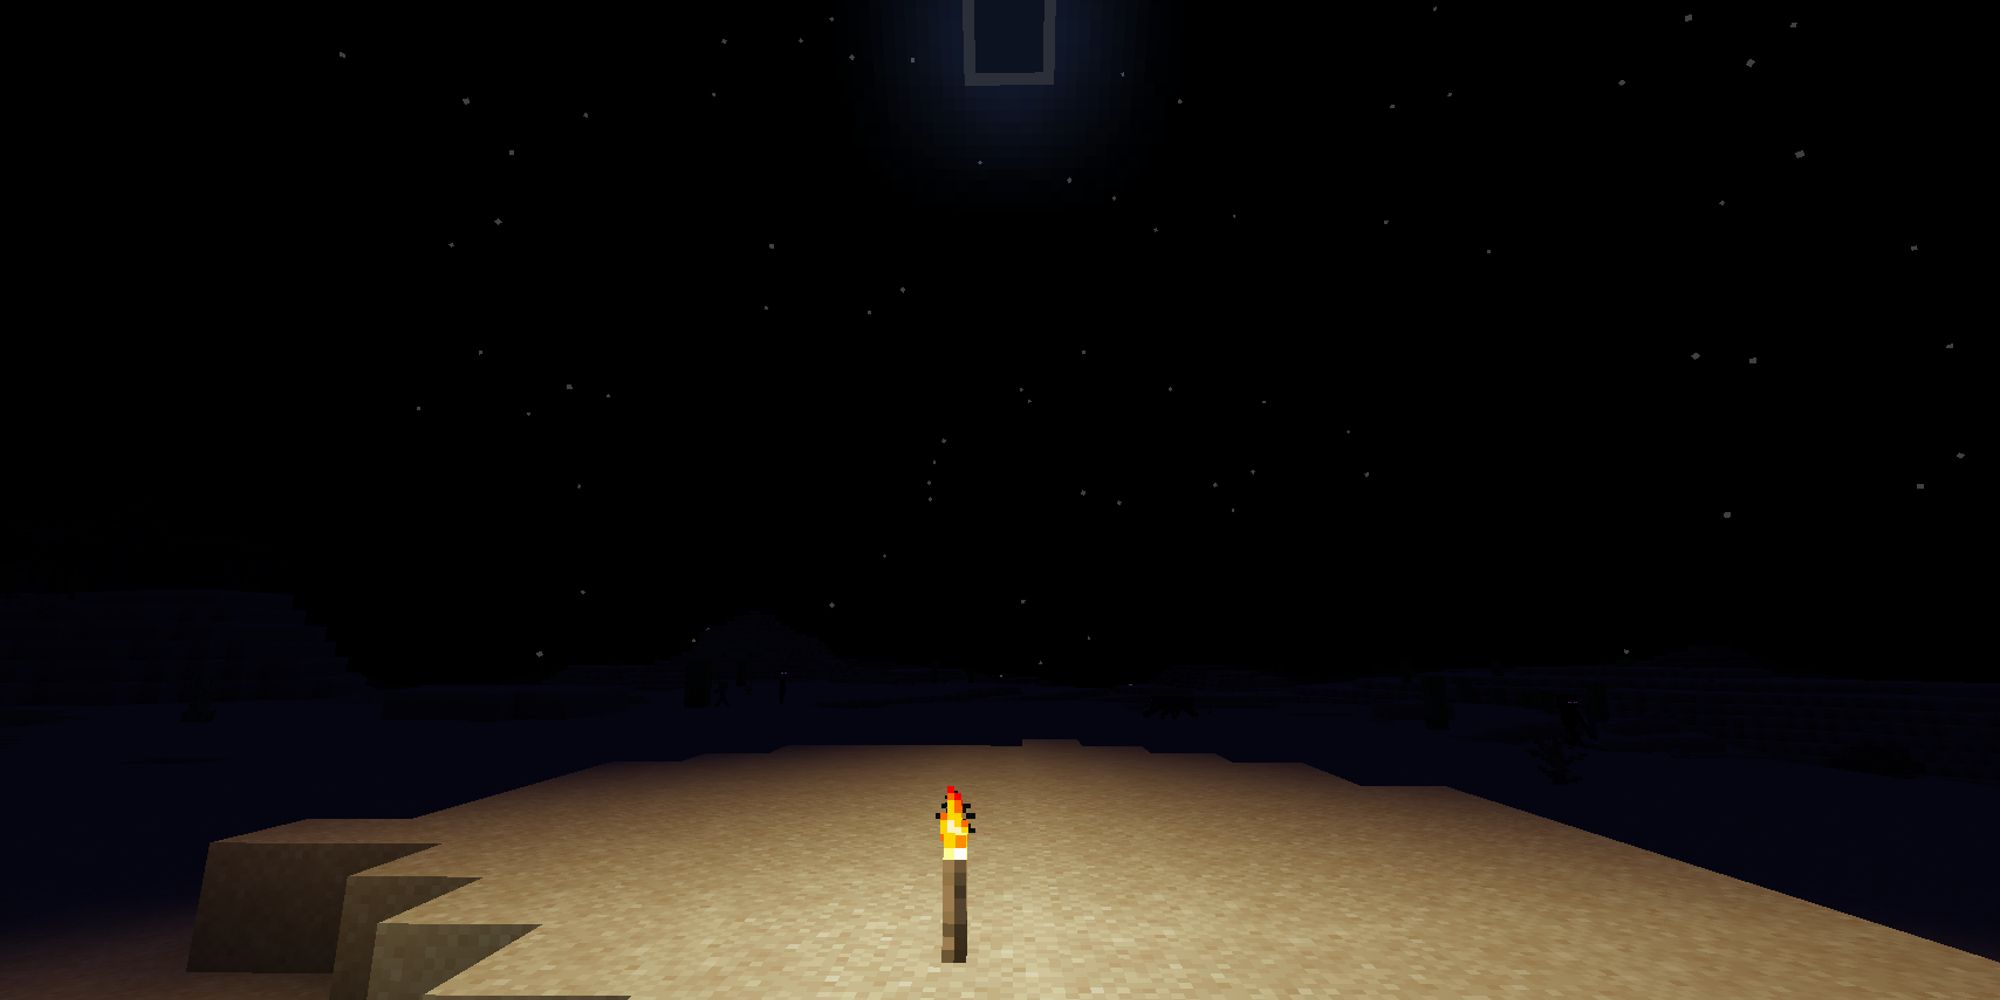 minecraft true darkness mod at night